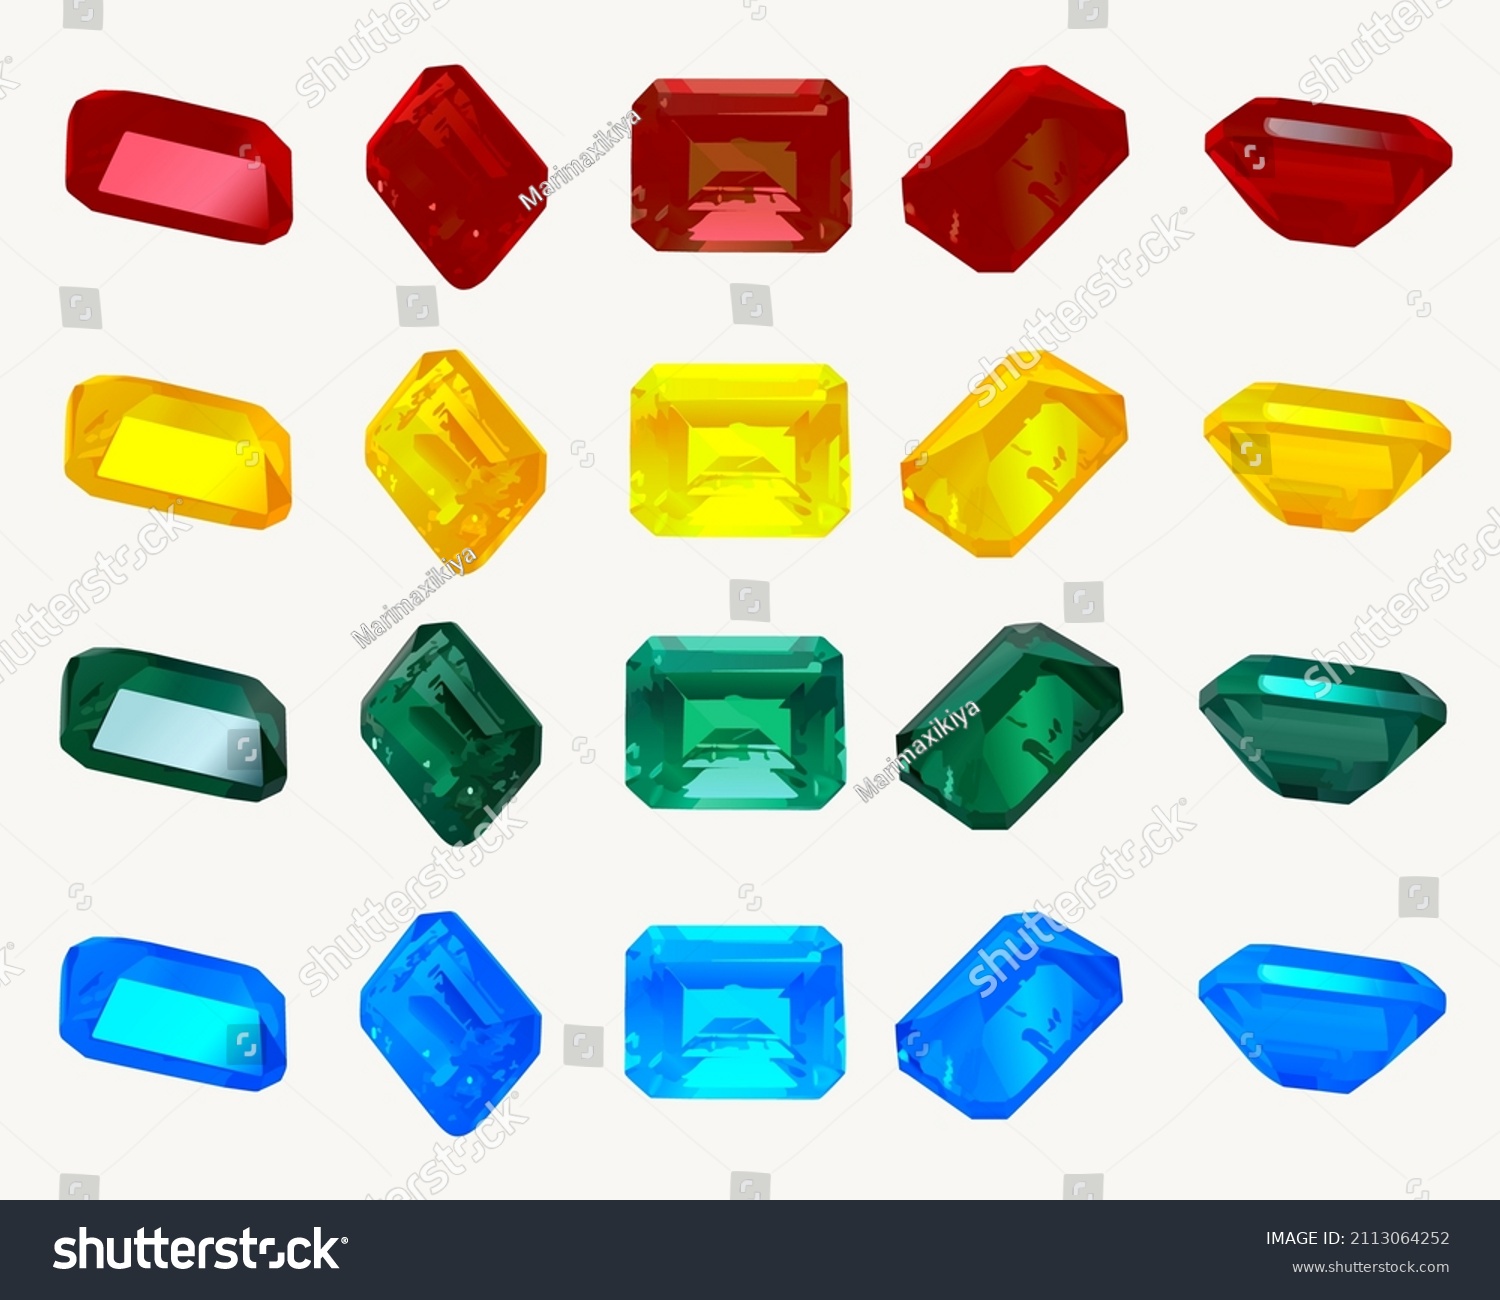 SVG of Vector illustration in flat realism style on the theme of jewelry, precious and semi-precious stones: emerald, ruby, citrine, topaz, aquamarine, garnet, heliodor, tsavorite, tanzanite, tourmaline svg